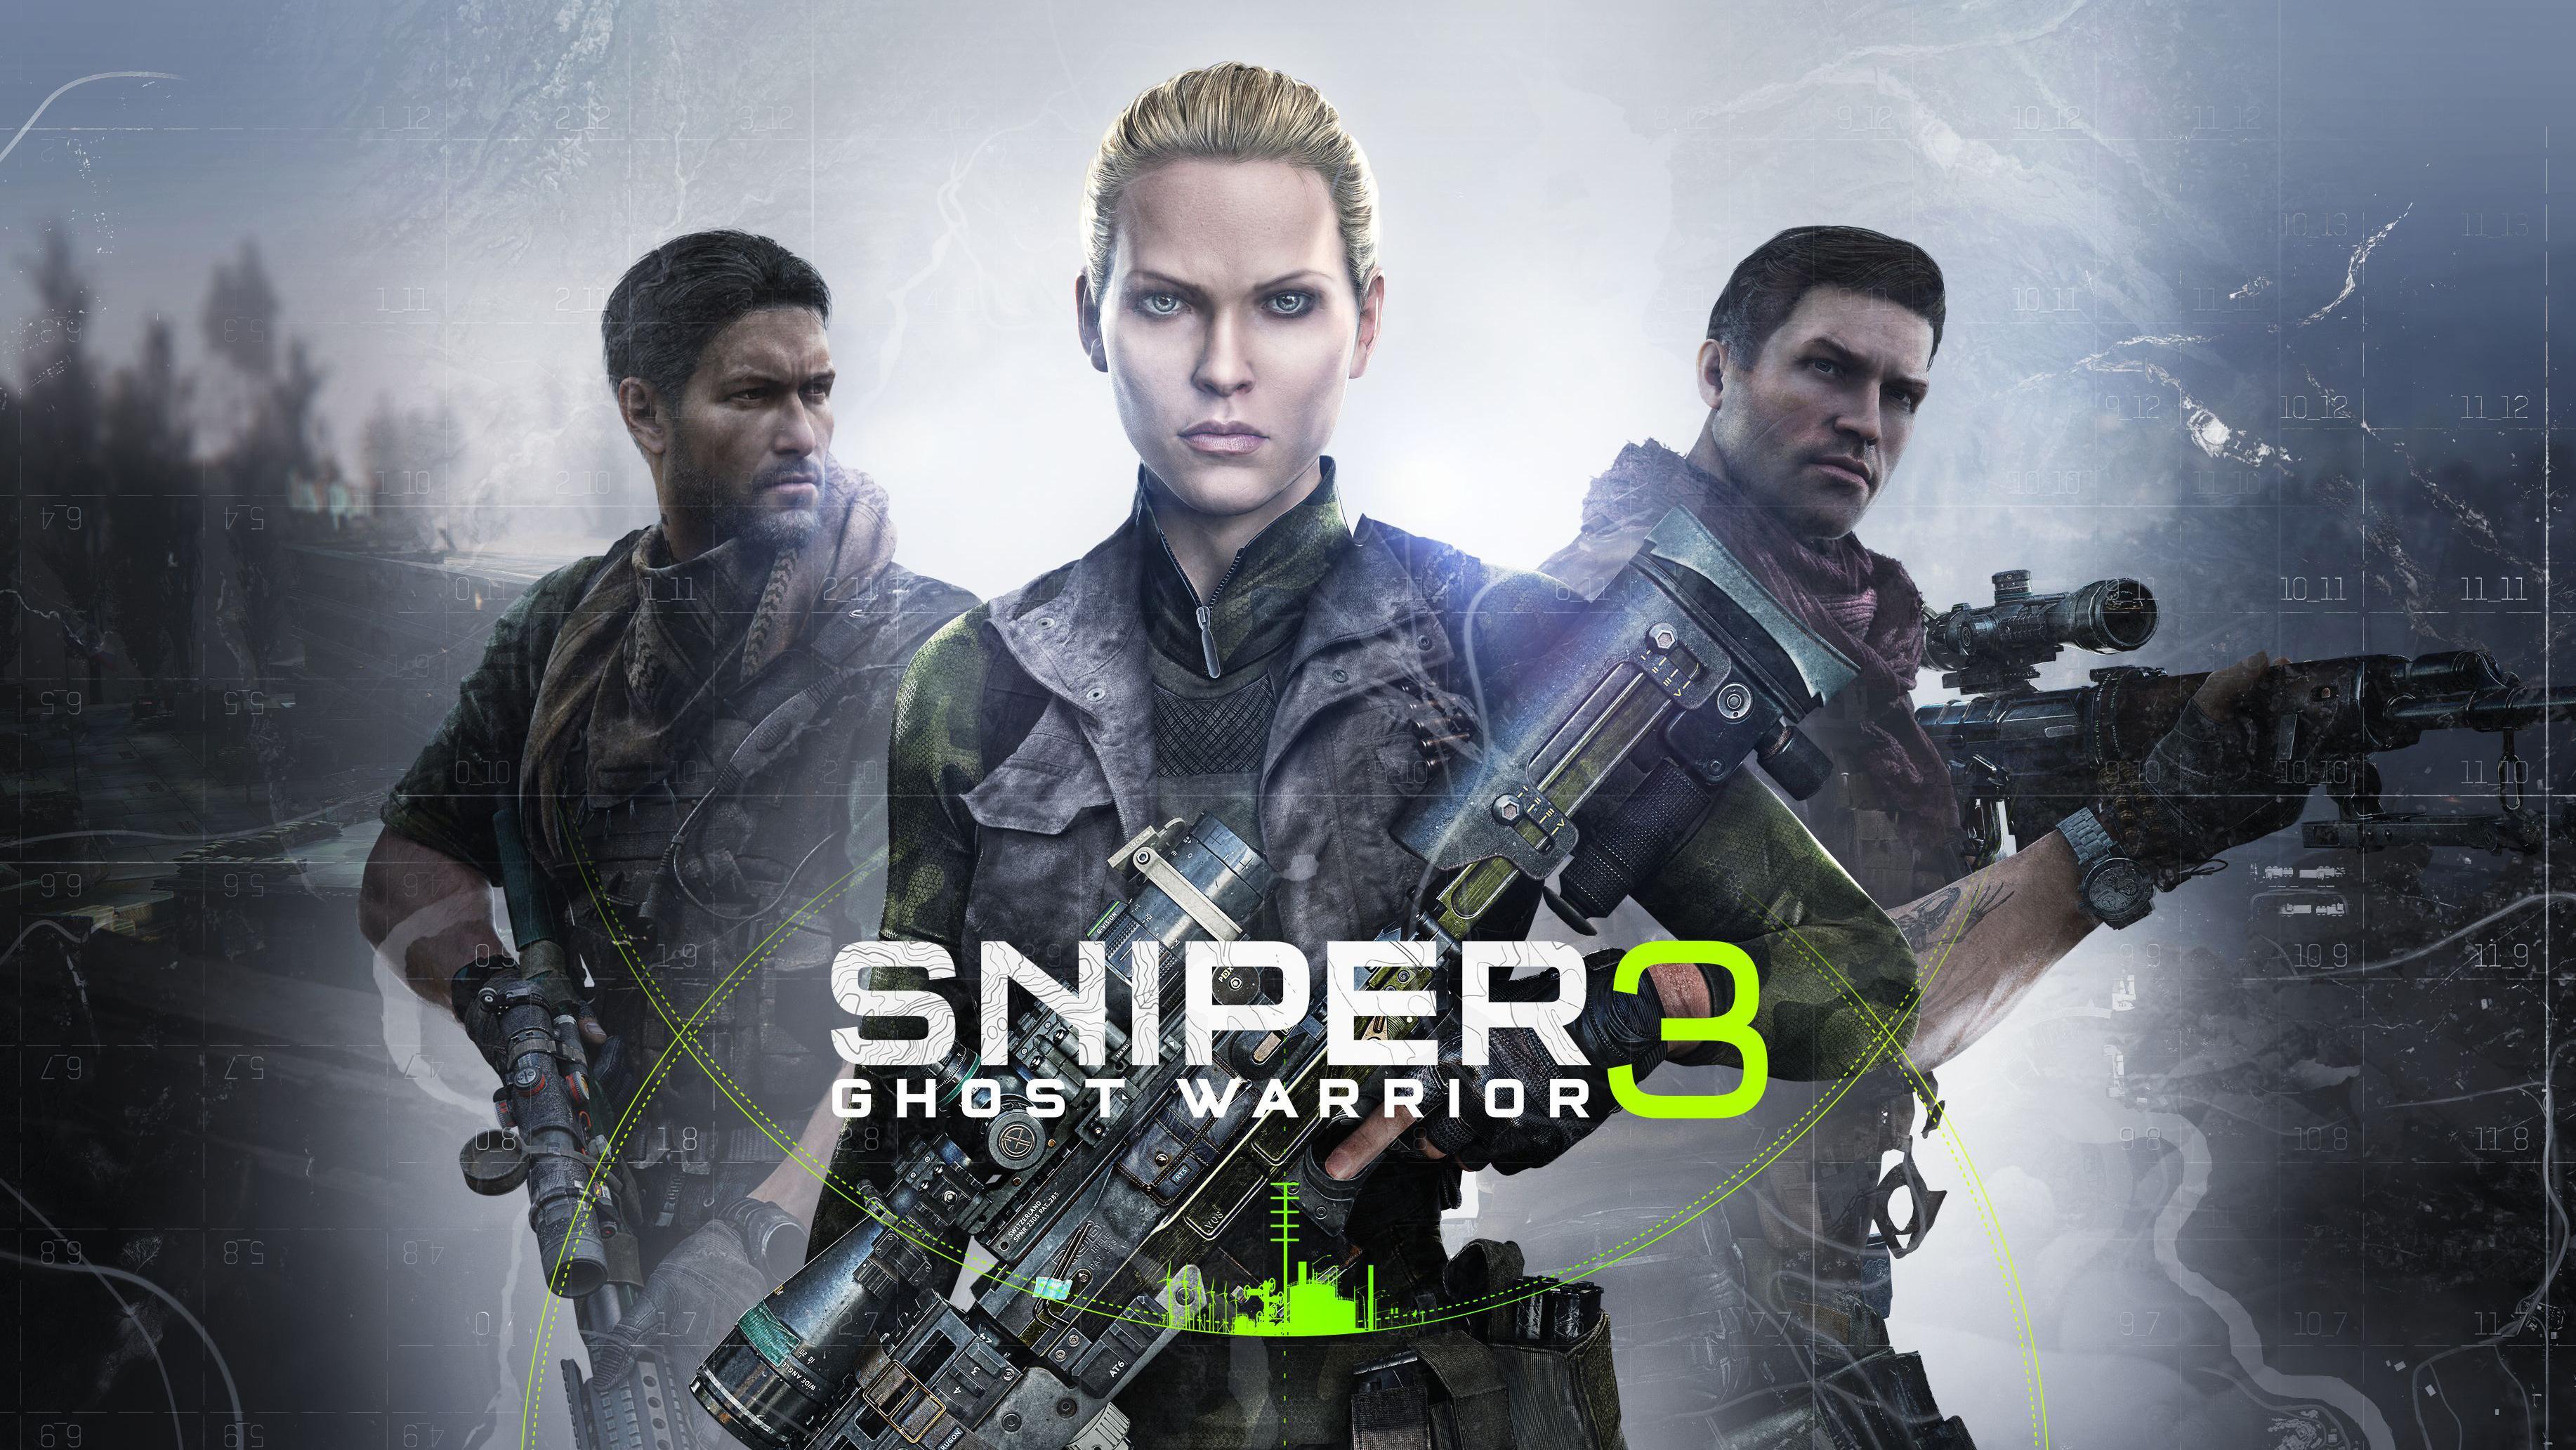 K, # #Sniper: Ghost Warrior 3